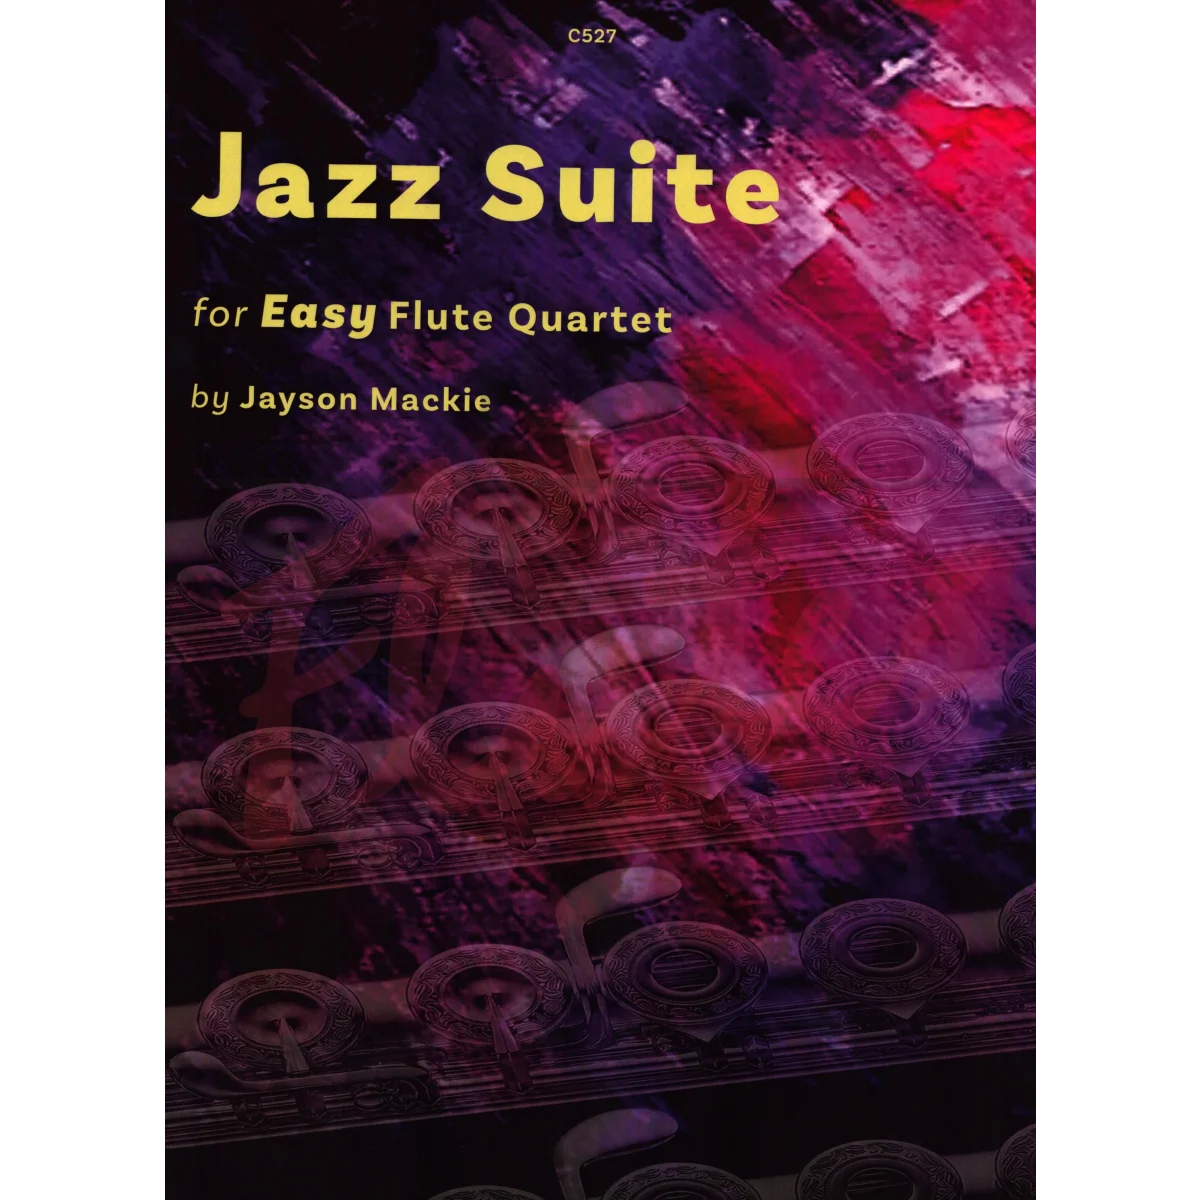 Jazz Suite for Easy Flute Quartet